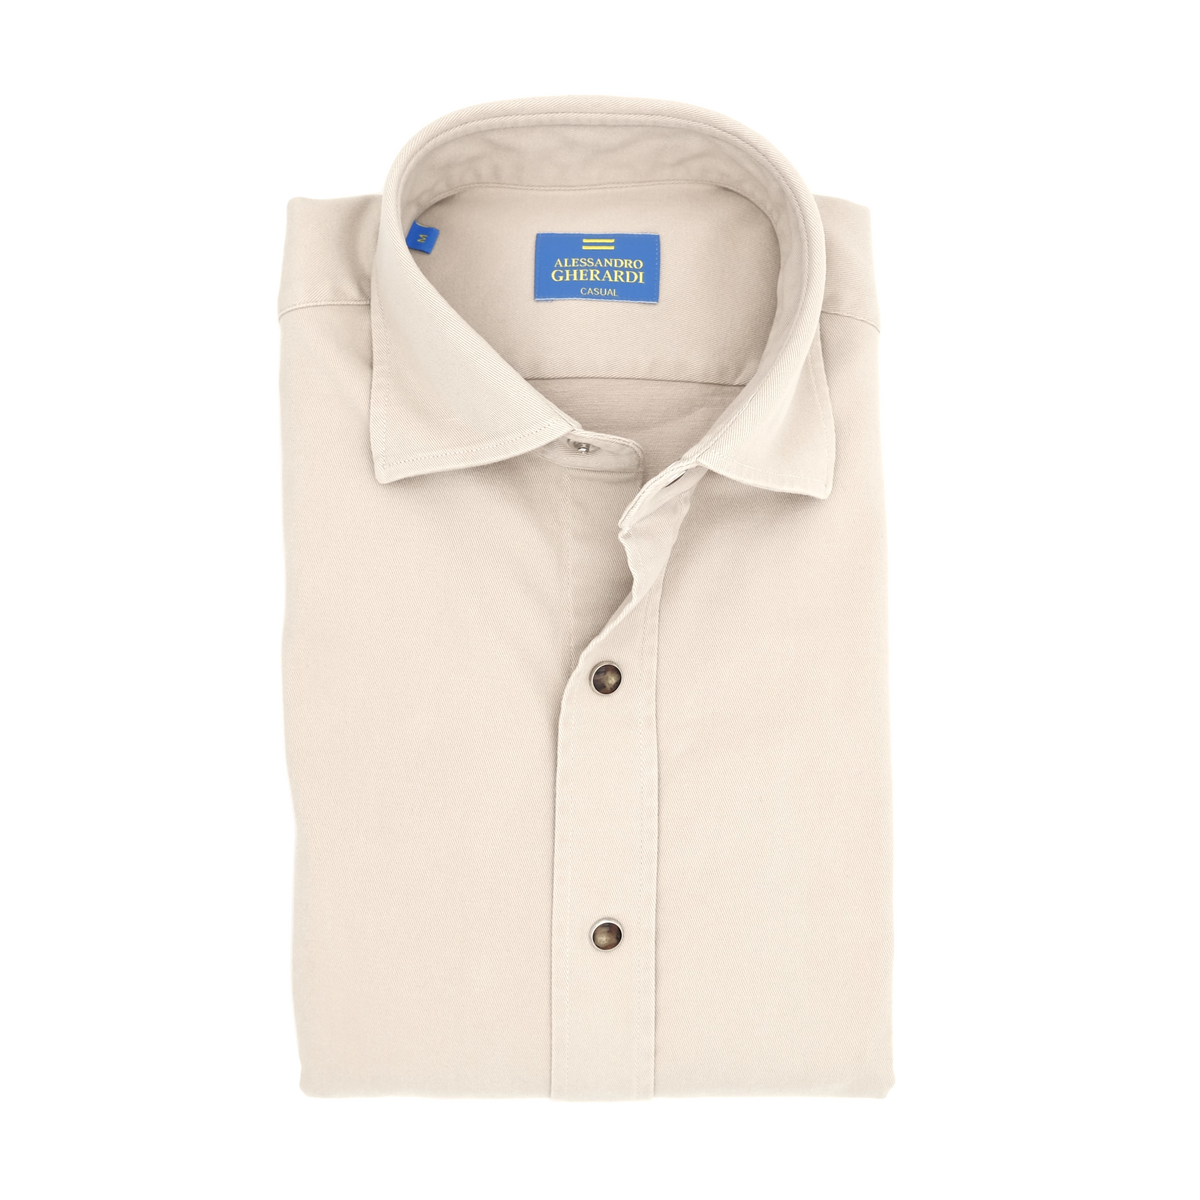 Light GHERARDI – ALESSANDRO Sartorial beige shirt Corner casual